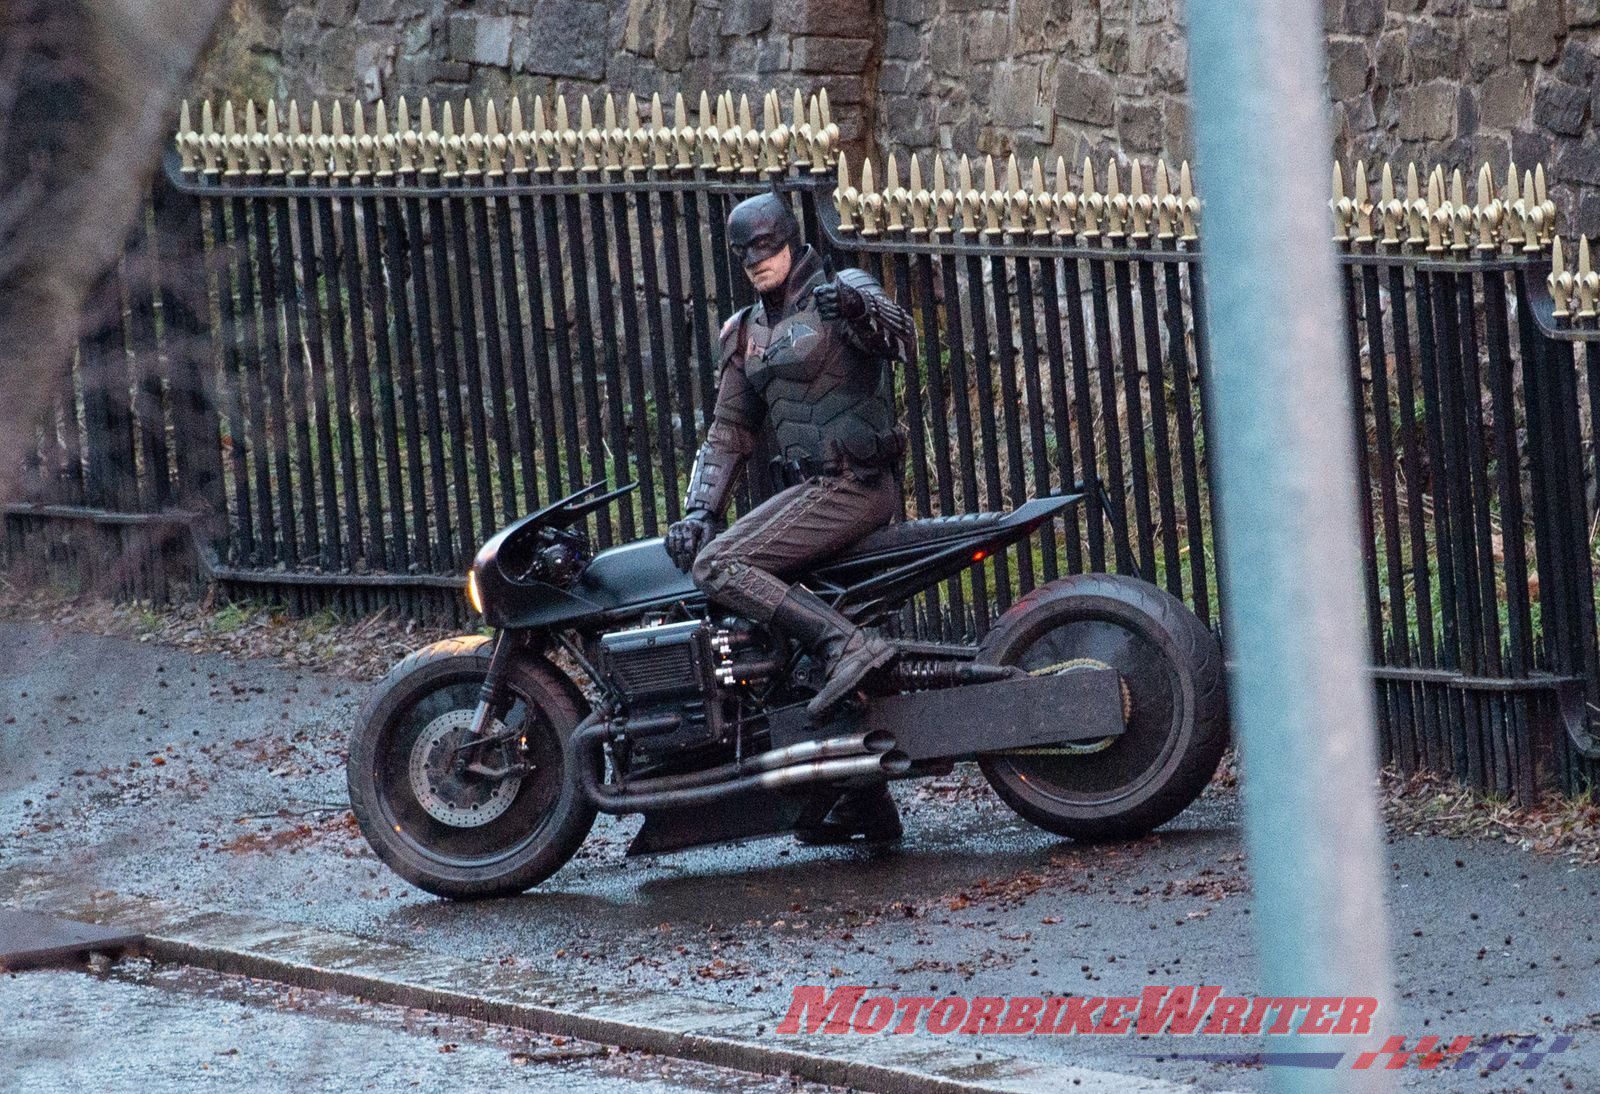 Batman crashes Batcycle in filming - webBikeWorld